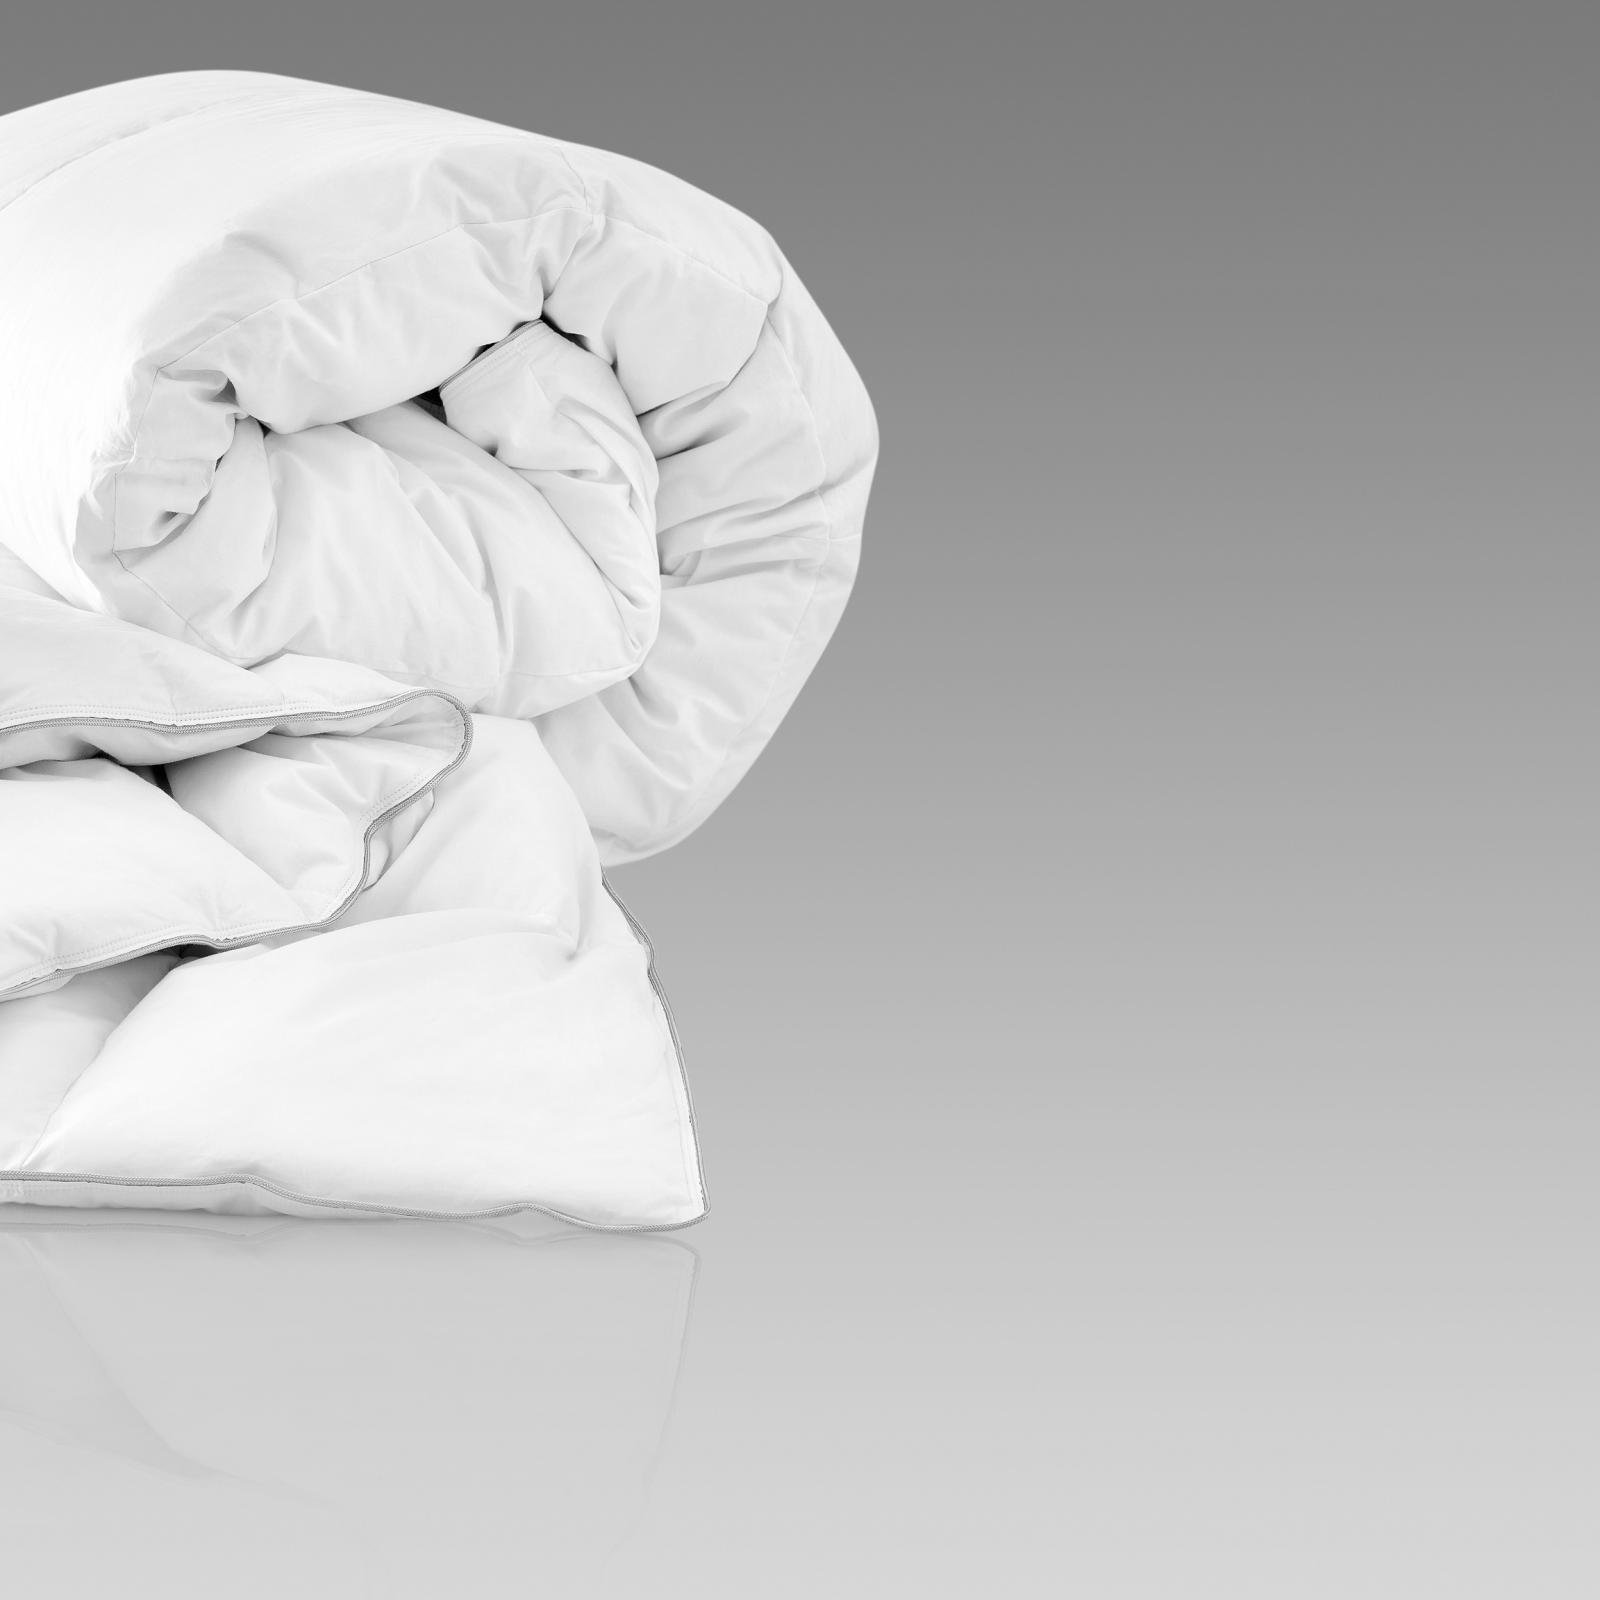 Одеяло Кайзер (20.04.13.0051), цвет белый, размер 200х210 см - фото 7